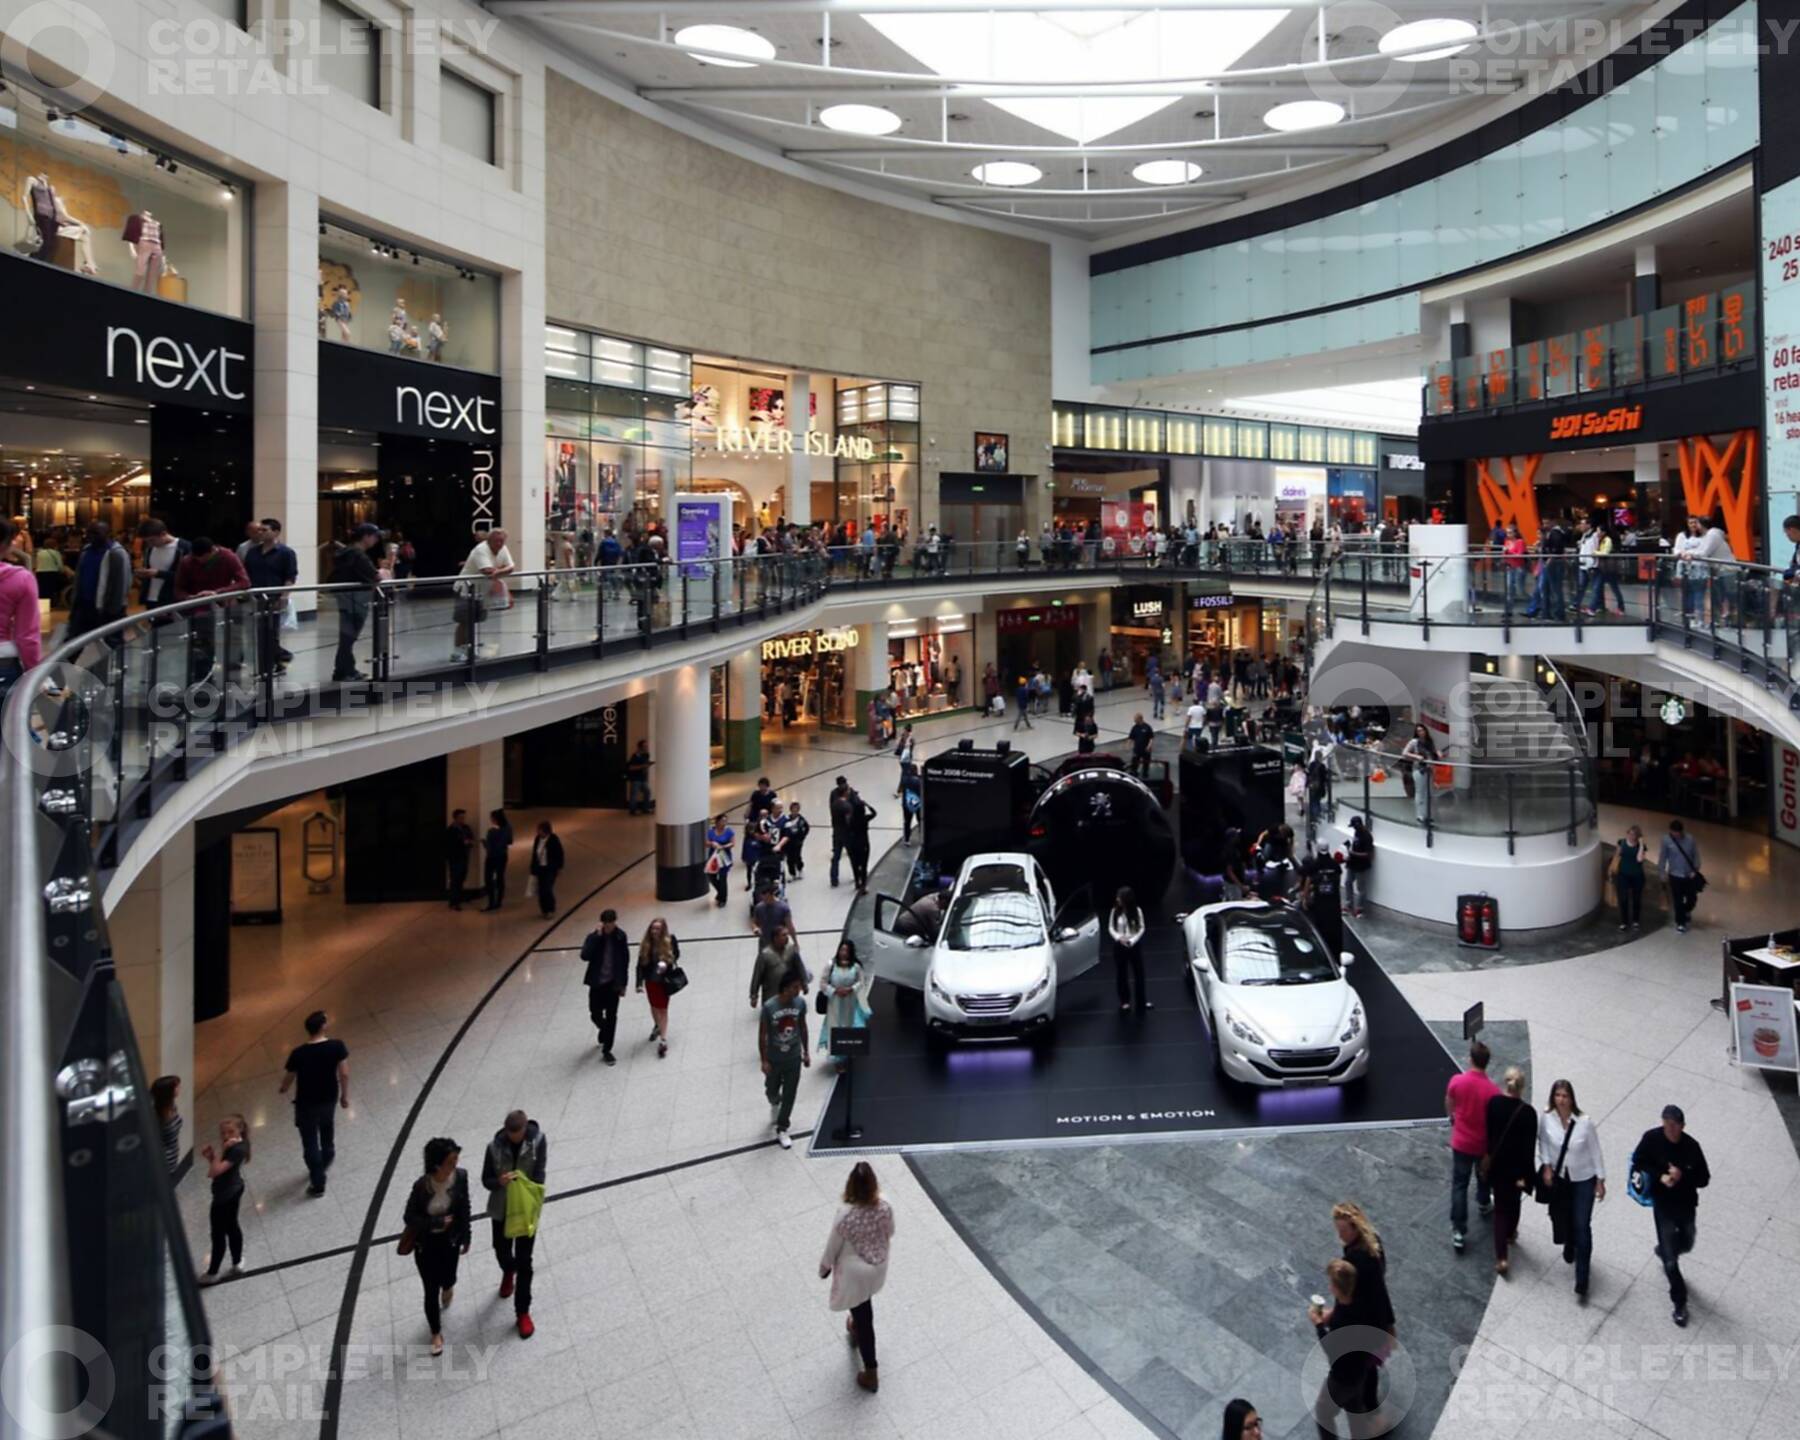 Manchester Arndale Shopping Centre